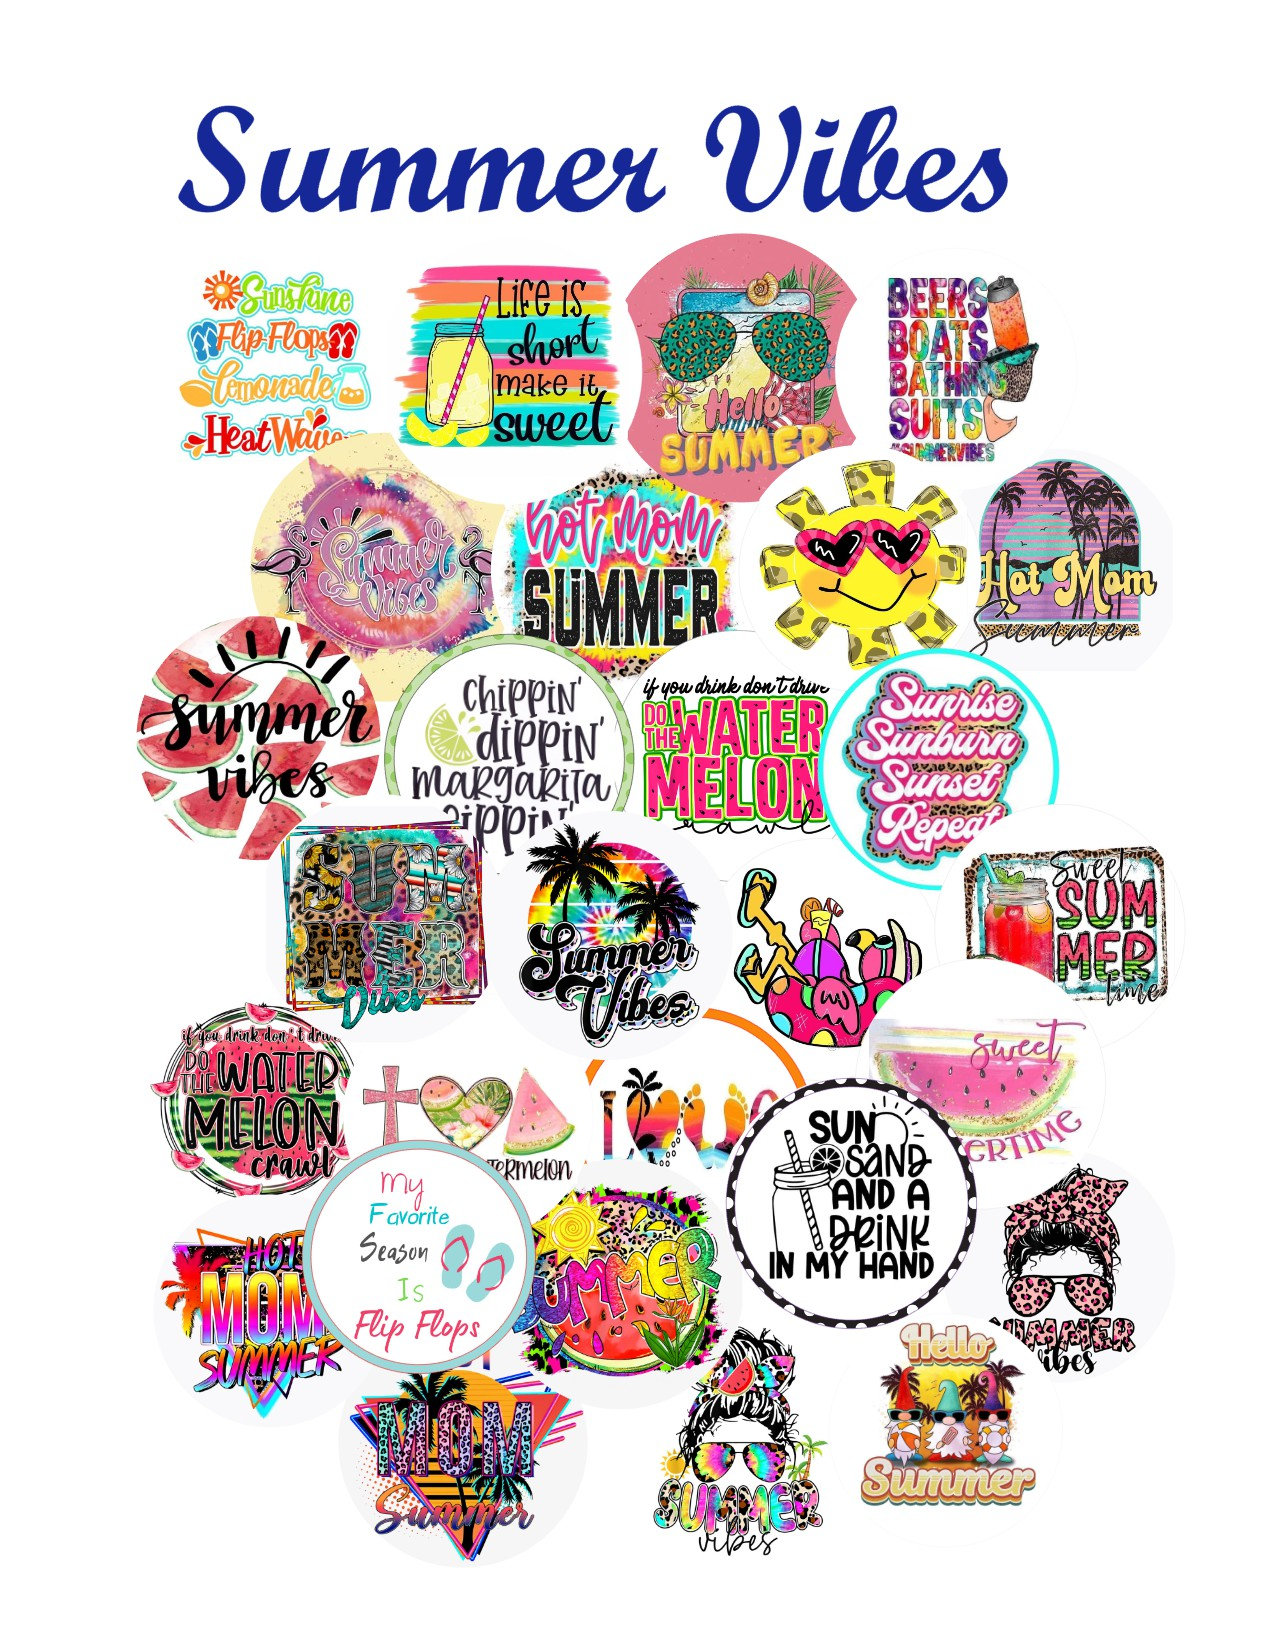 Beach Summer Cardstock Circles, Cardstock Cutouts, Freshies, Cardstock,  Freshie Cardstock, Freshie Images, Freshie Designs, Cardstock Images